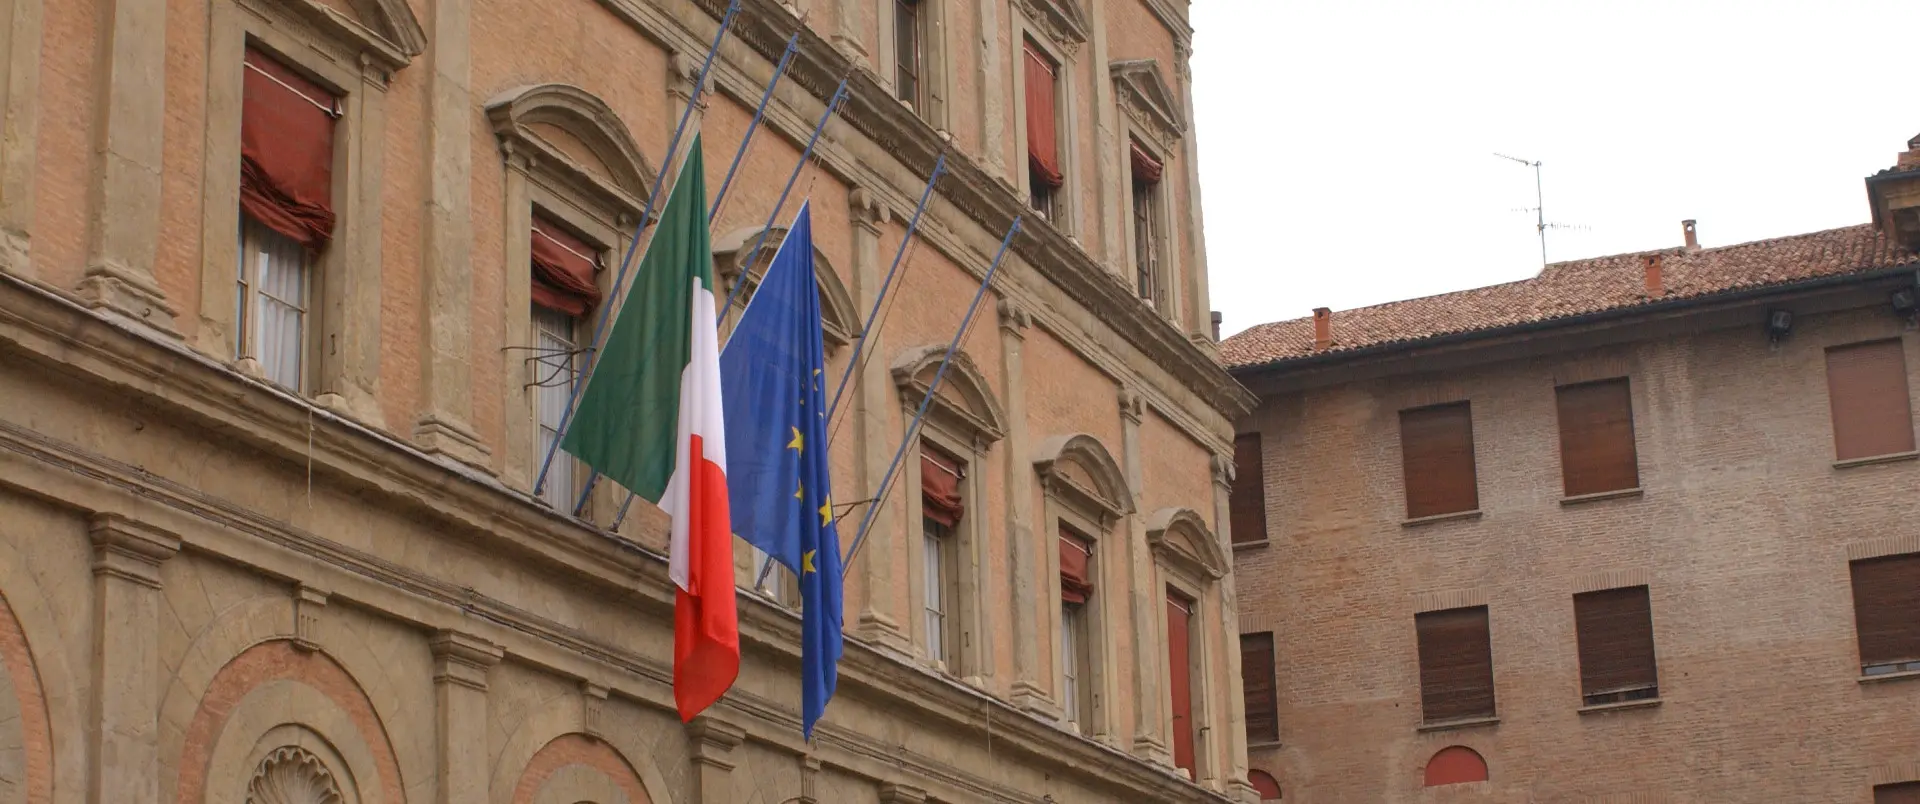 Palazzo Malvezzi - Bologna